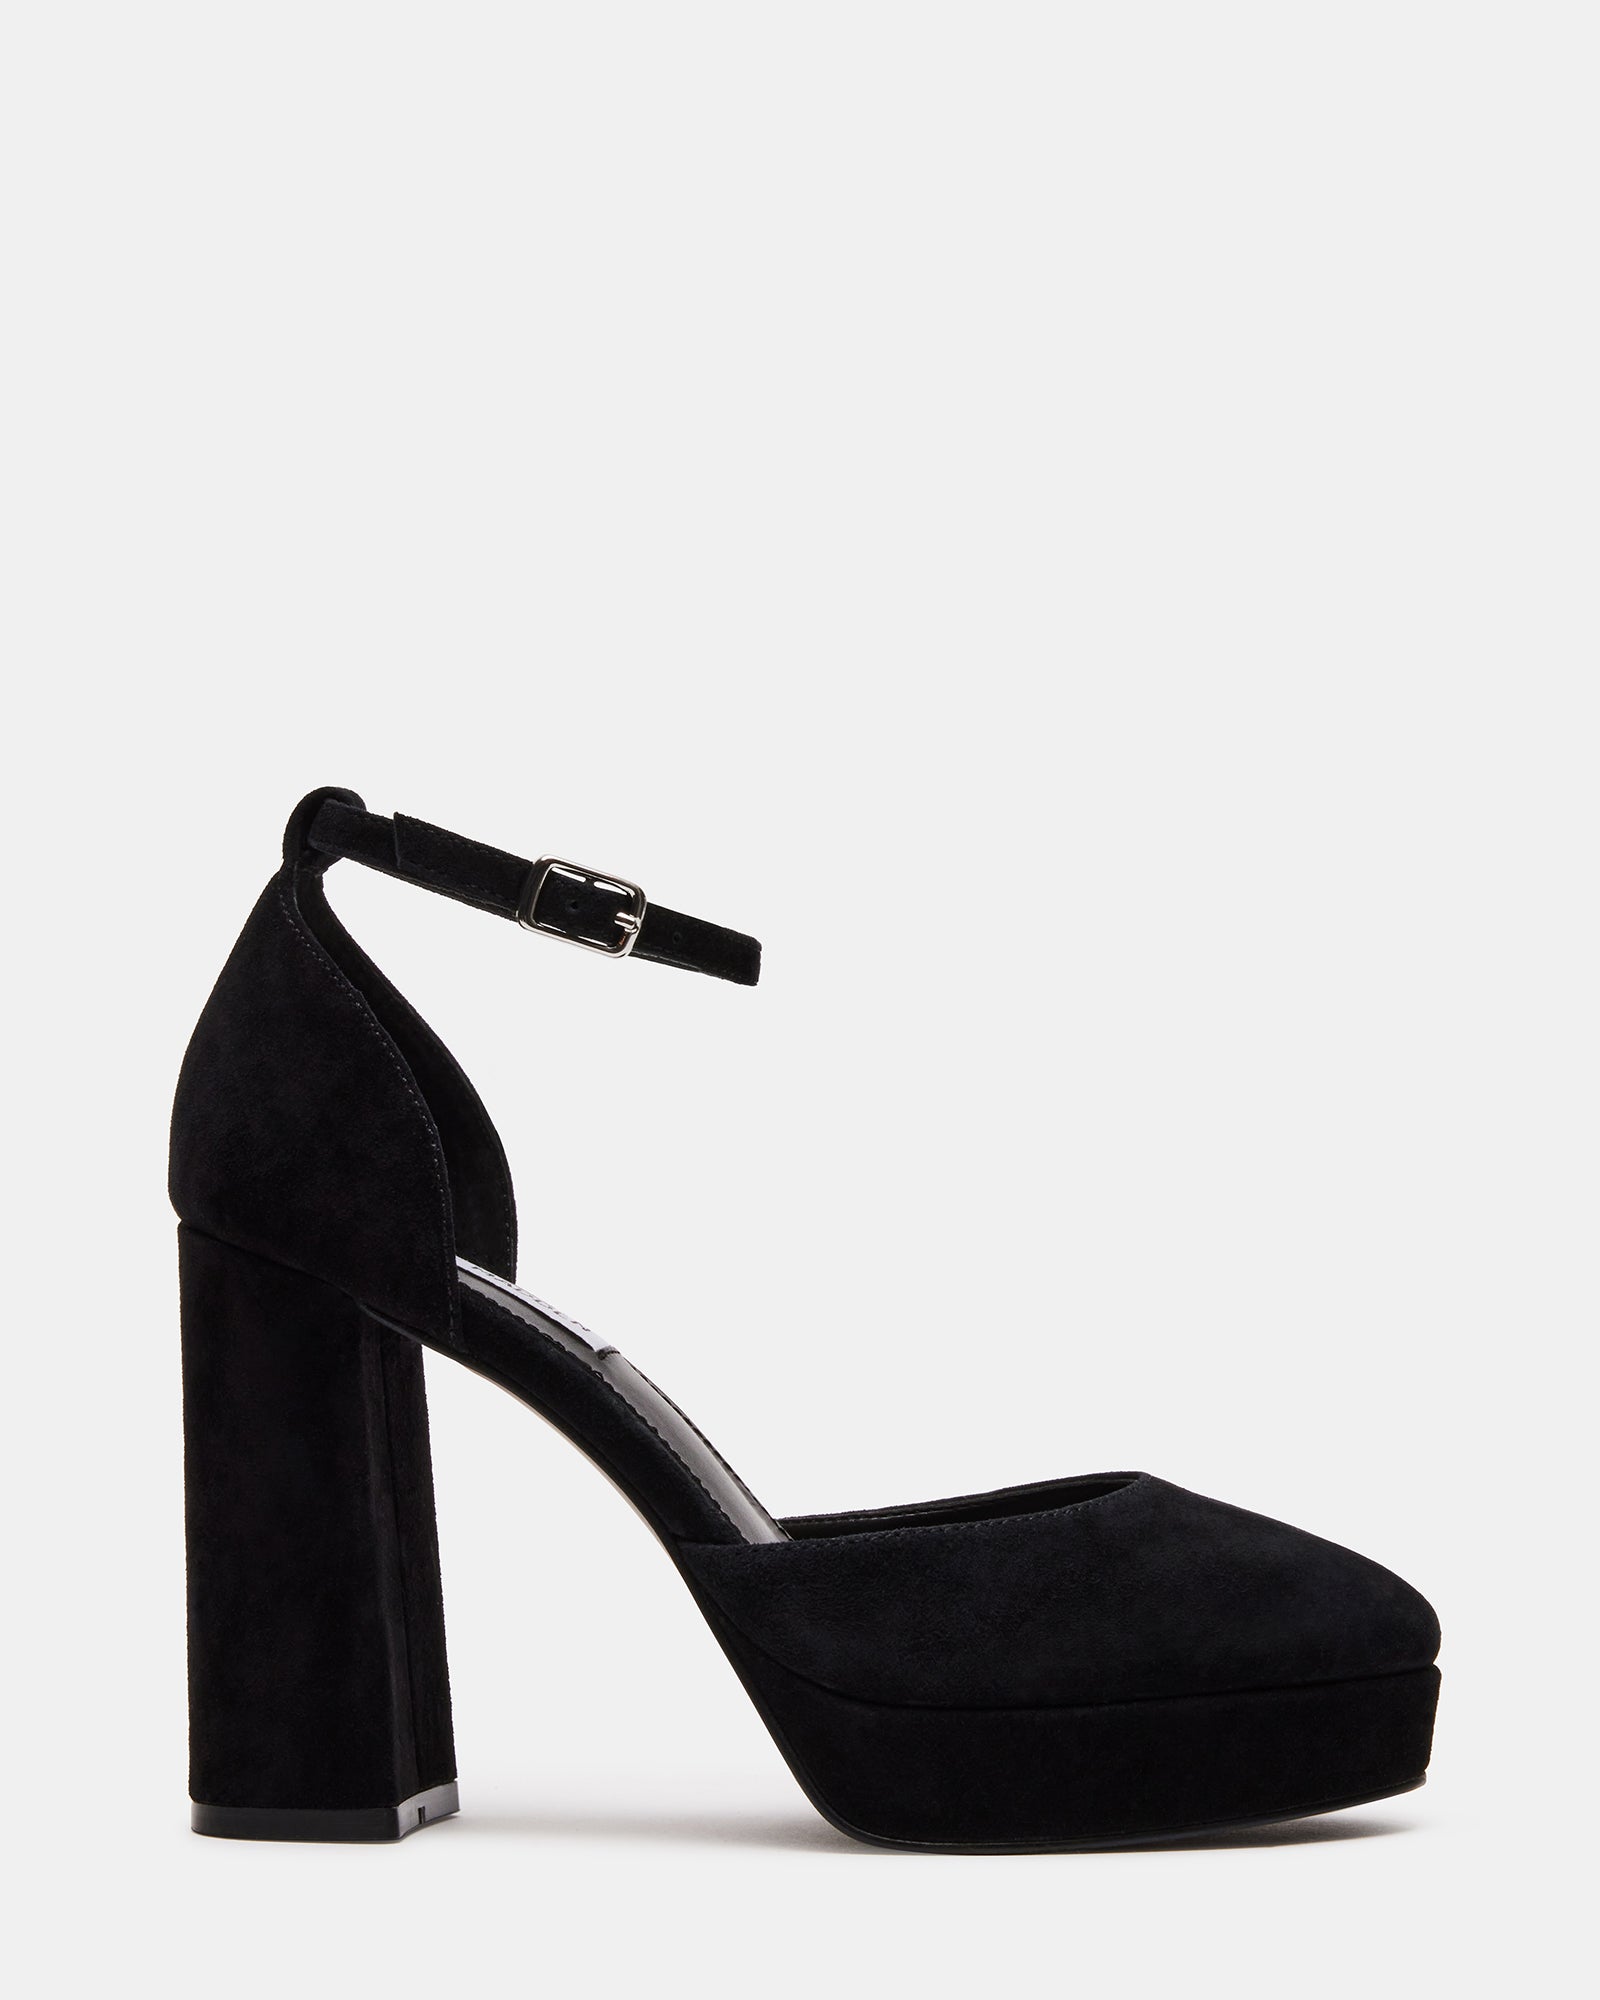 Charlotte: Black Suede & Patent - Bunion Friendly Heels | Sole Bliss